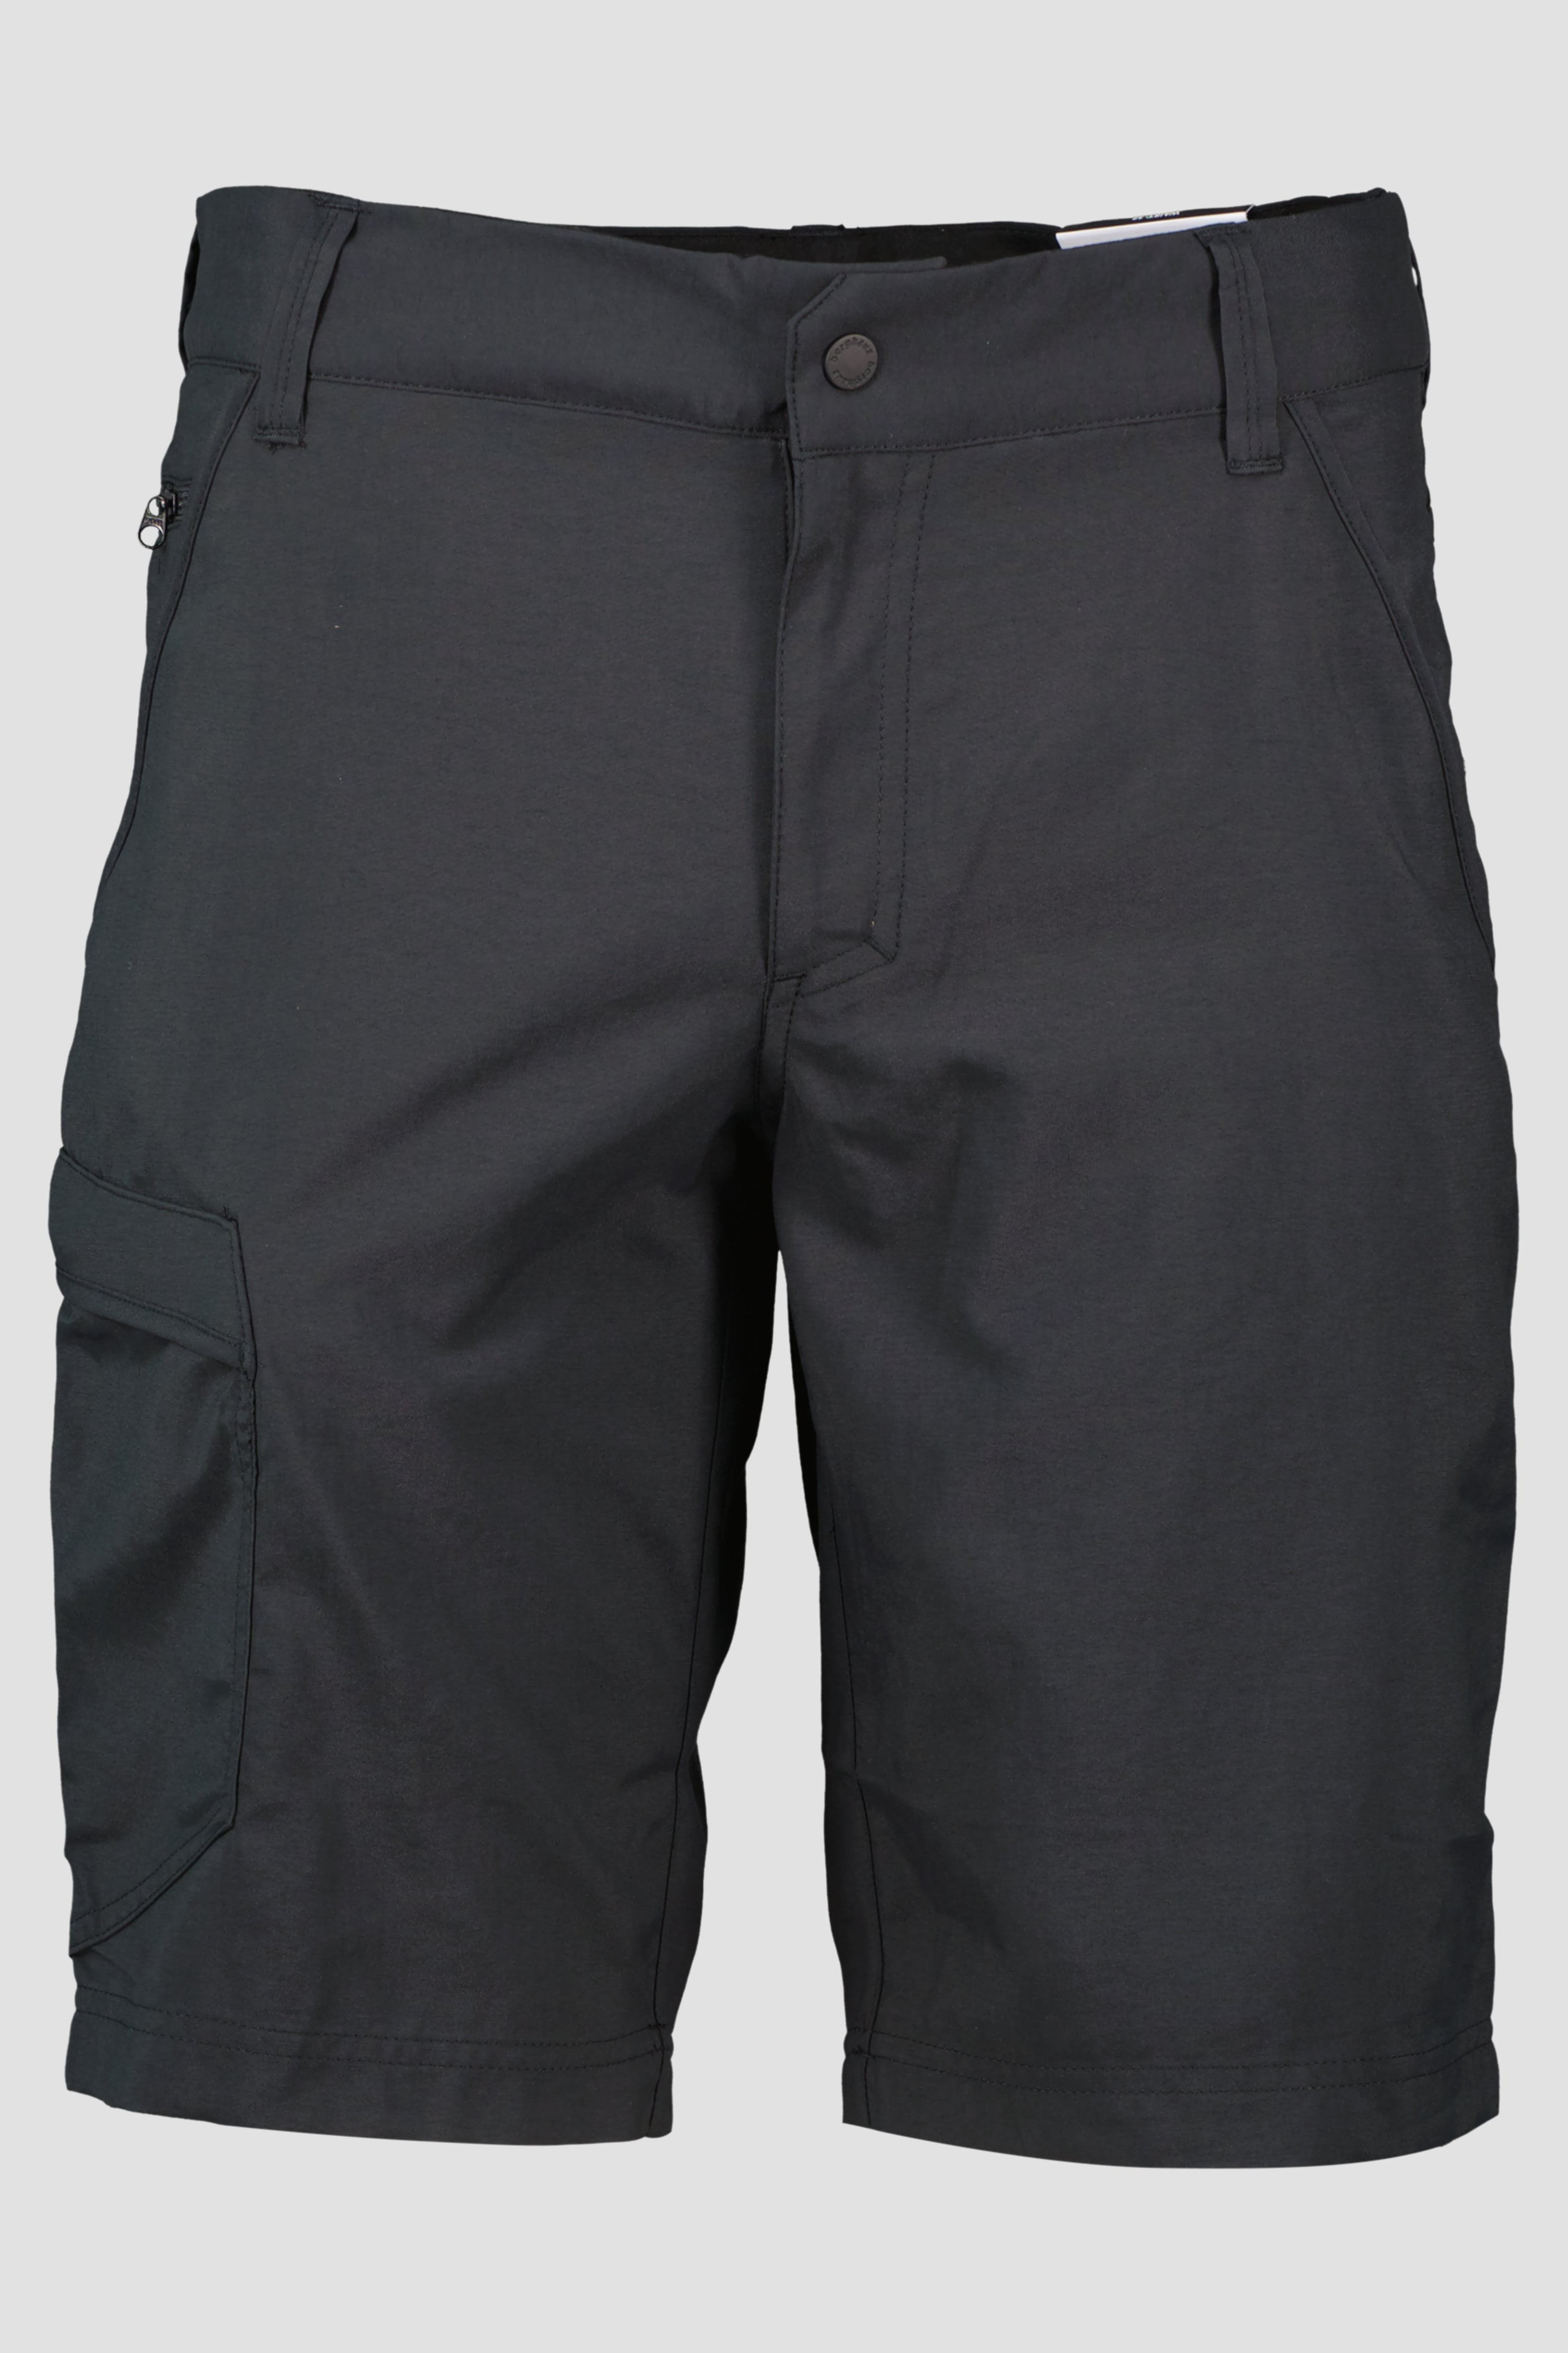 Men's Berghaus Black Black Navigator 2.0 Shorts